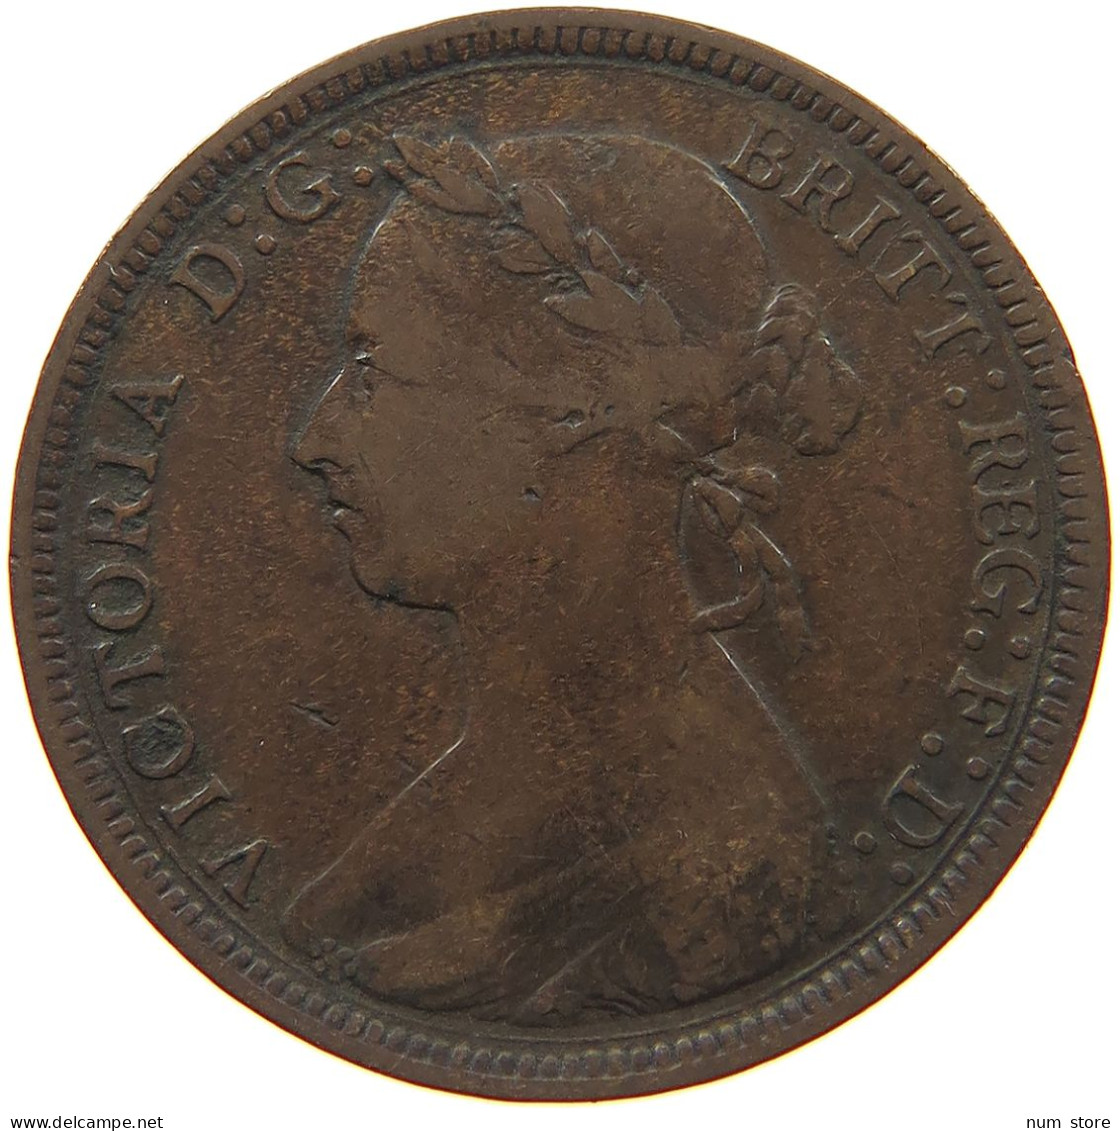 GREAT BRITAIN HALFPENNY 1887 Victoria 1837-1901 #s019 0275 - C. 1/2 Penny